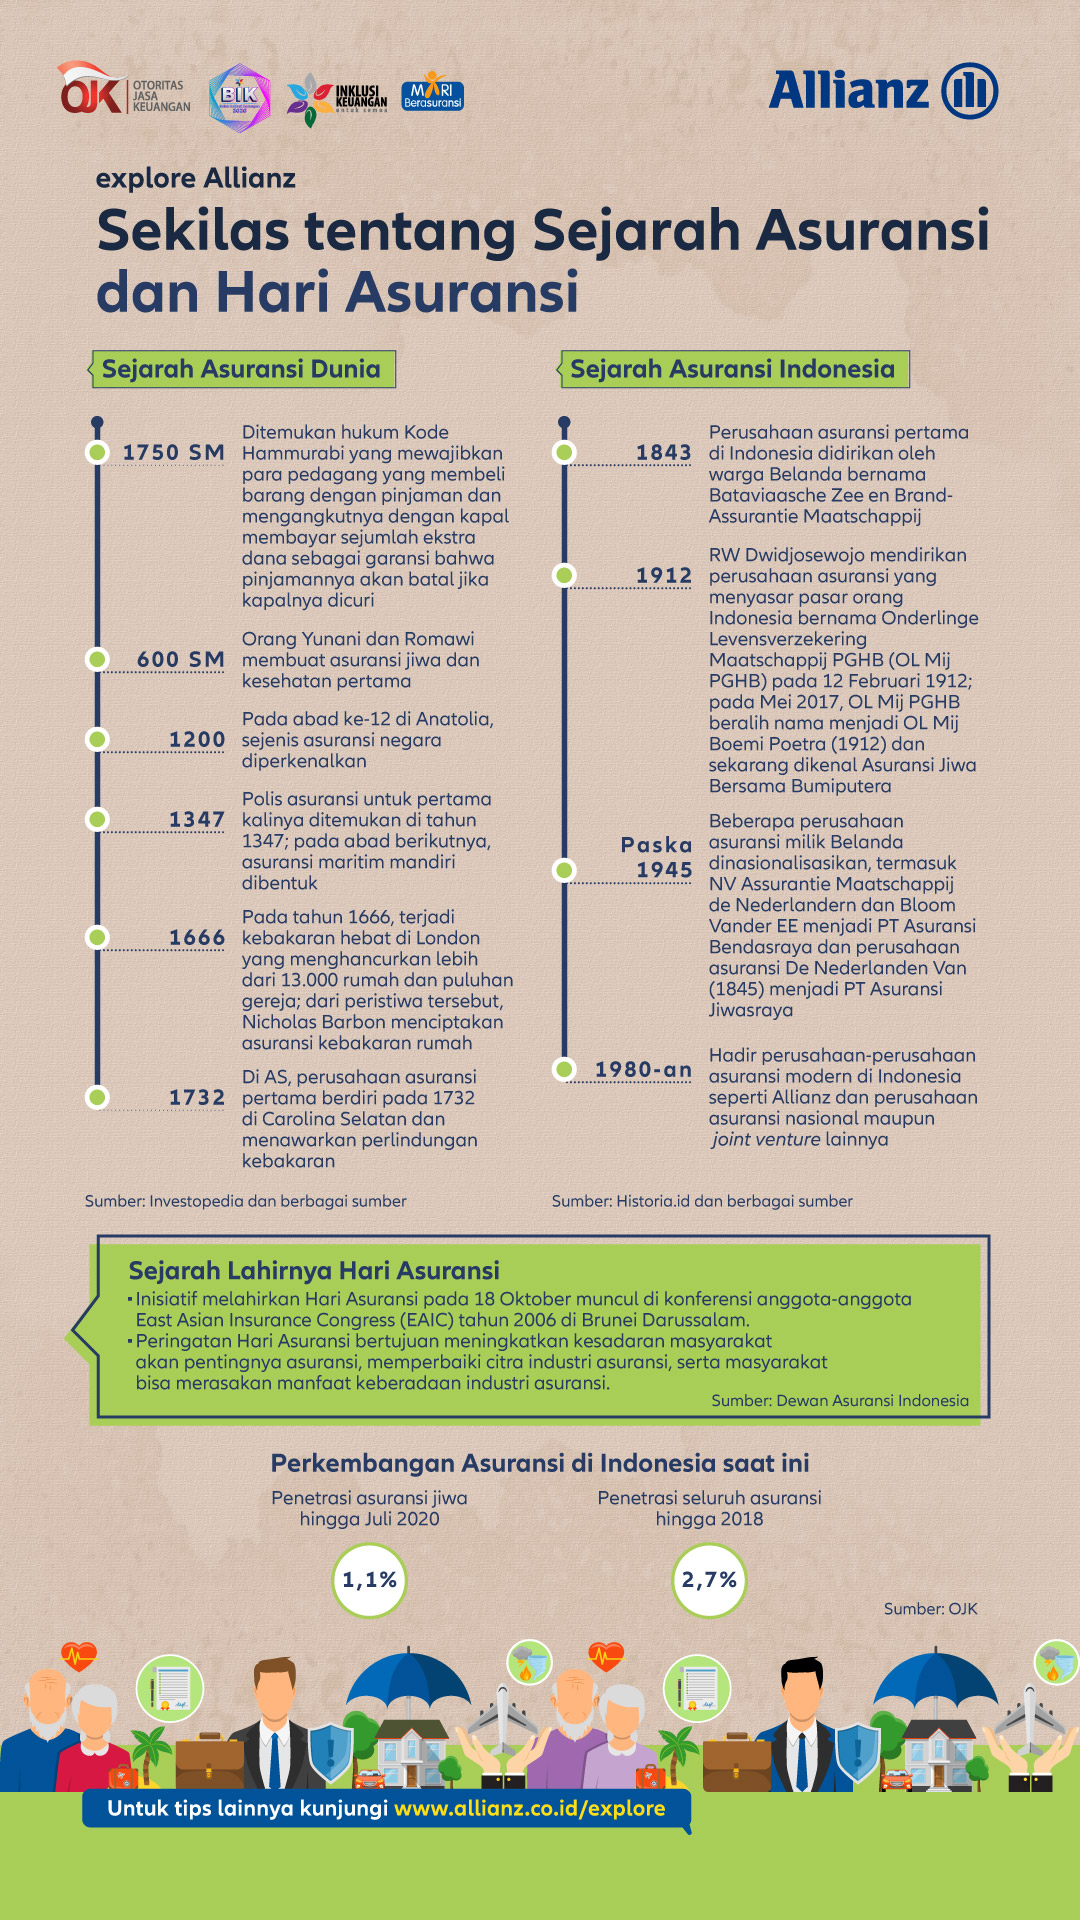 Mengenal Sejarah Asuransi di Dunia